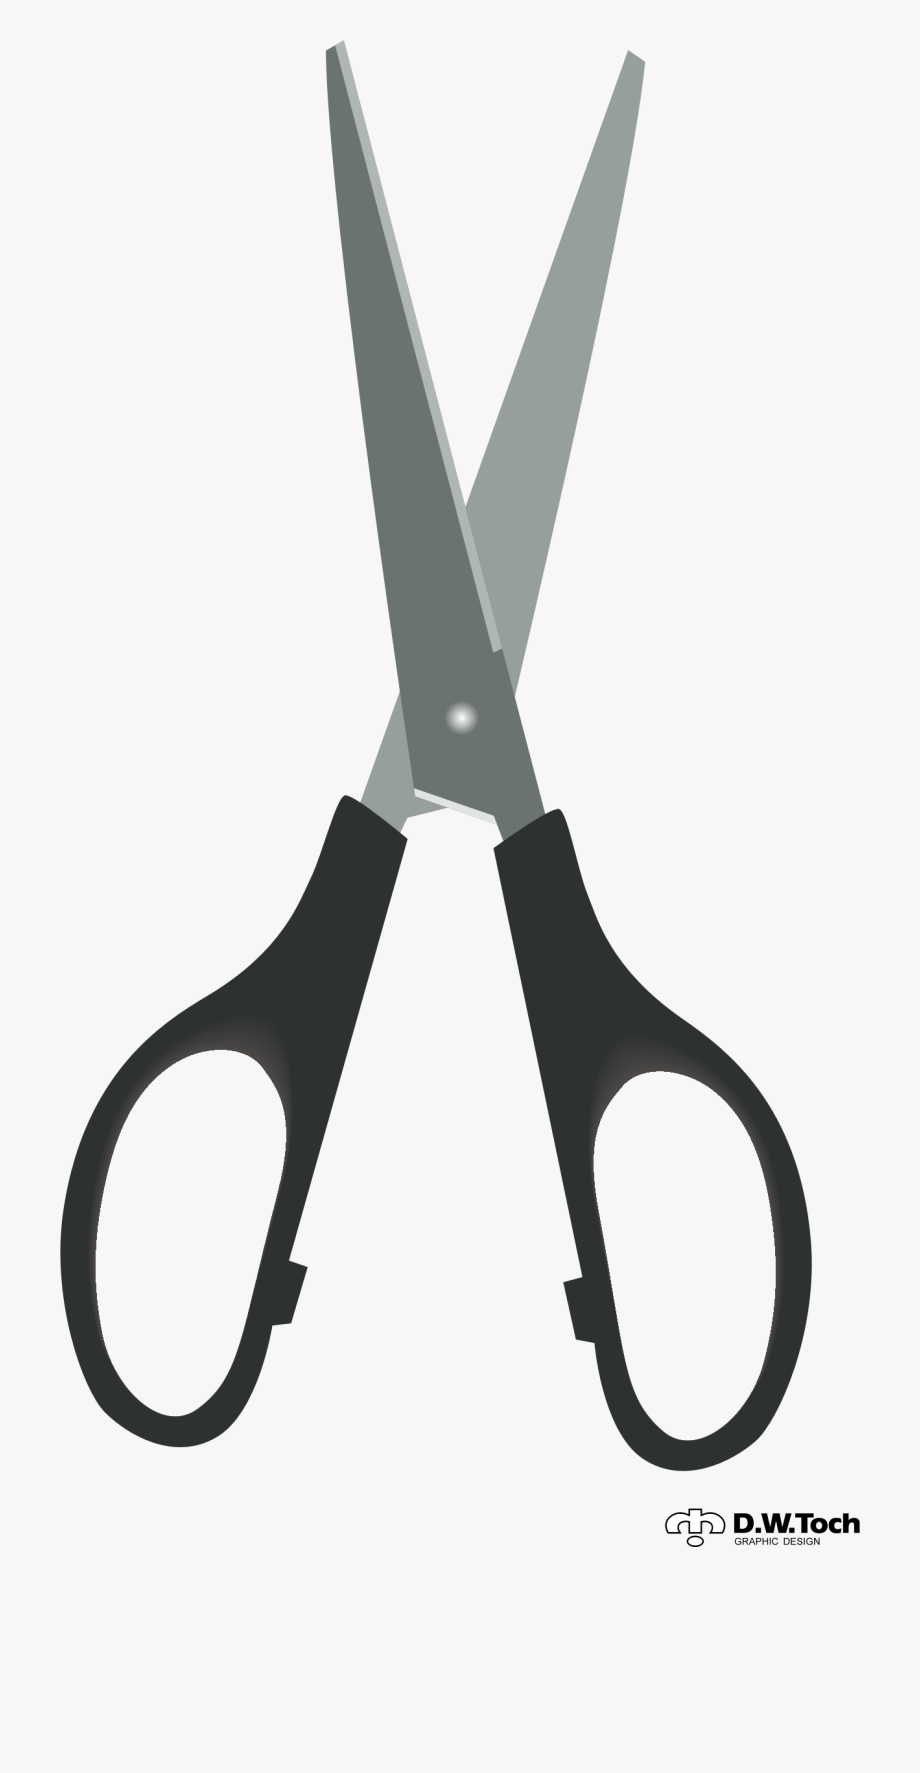 shears clipart big scissors